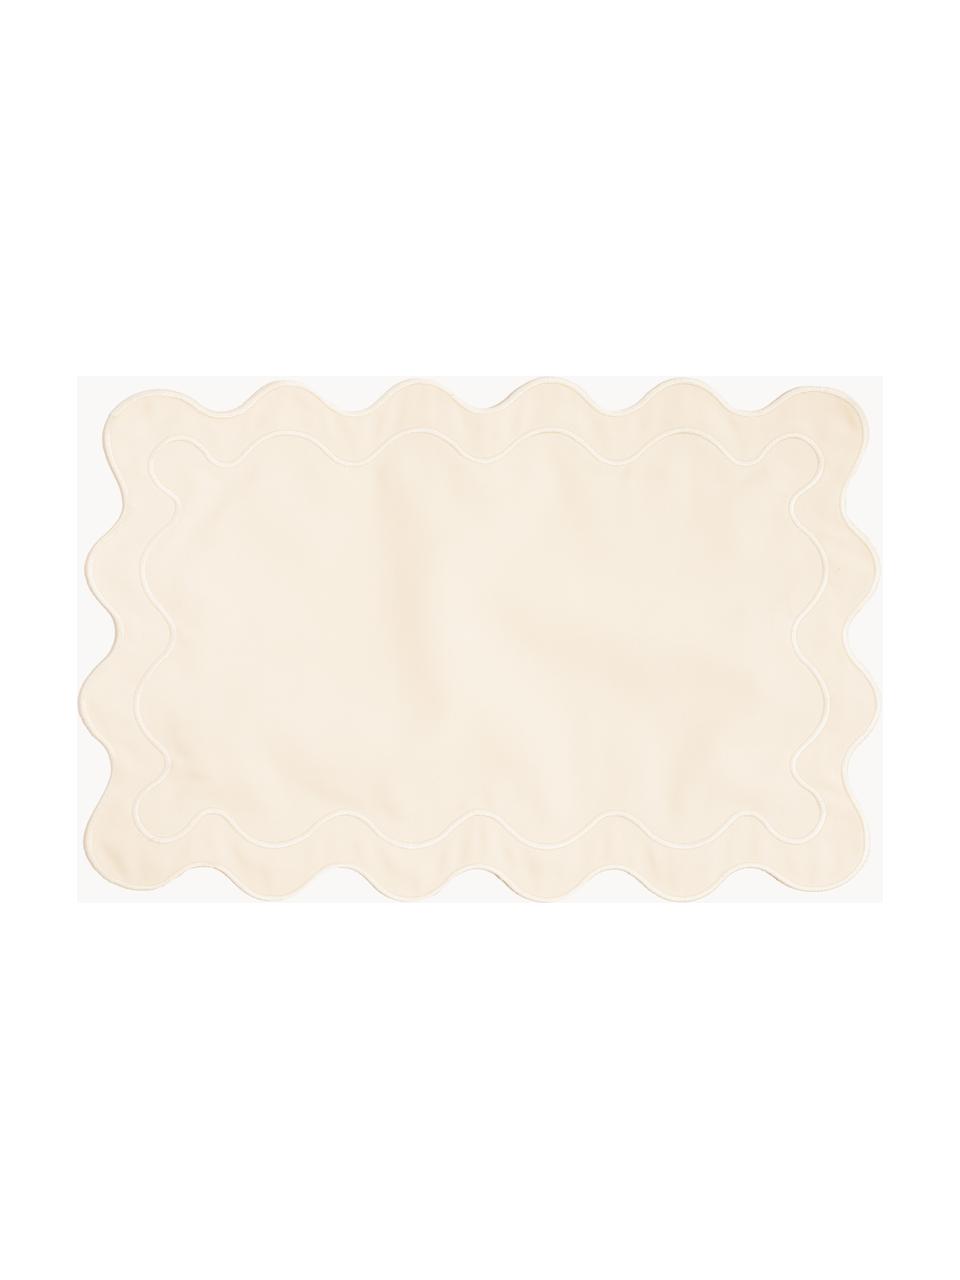 Manteles individuales Wave, 4 uds., 65% poliéster, 35% algodón, Amarillo sol, blanco crema, An 35 x L 50 cm